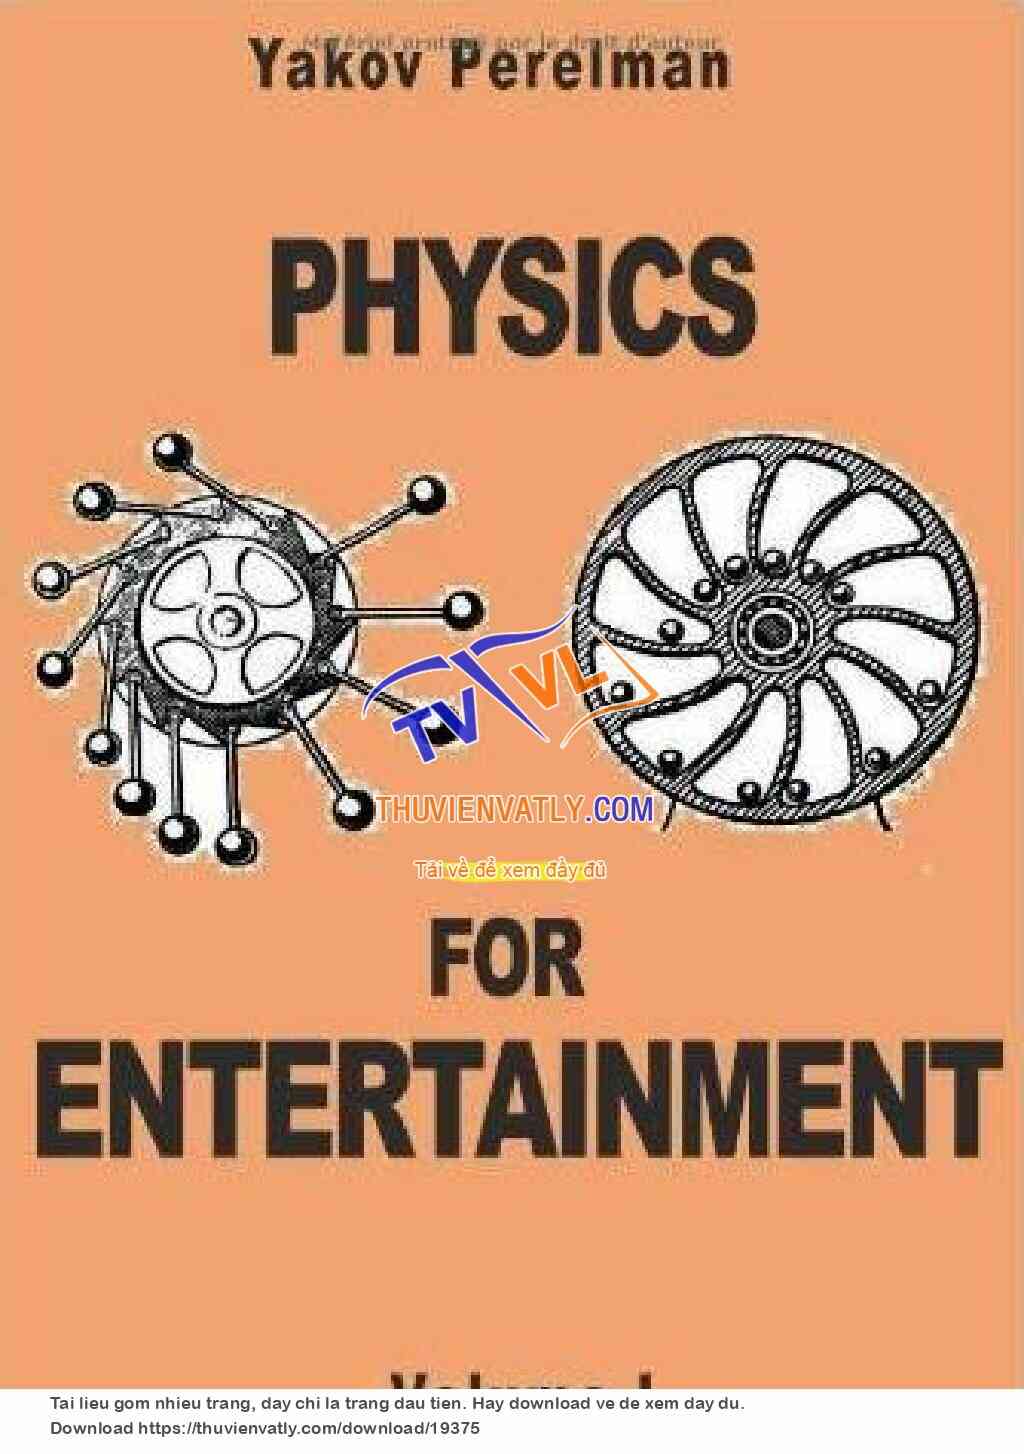 Physics 4 Entertainment 1